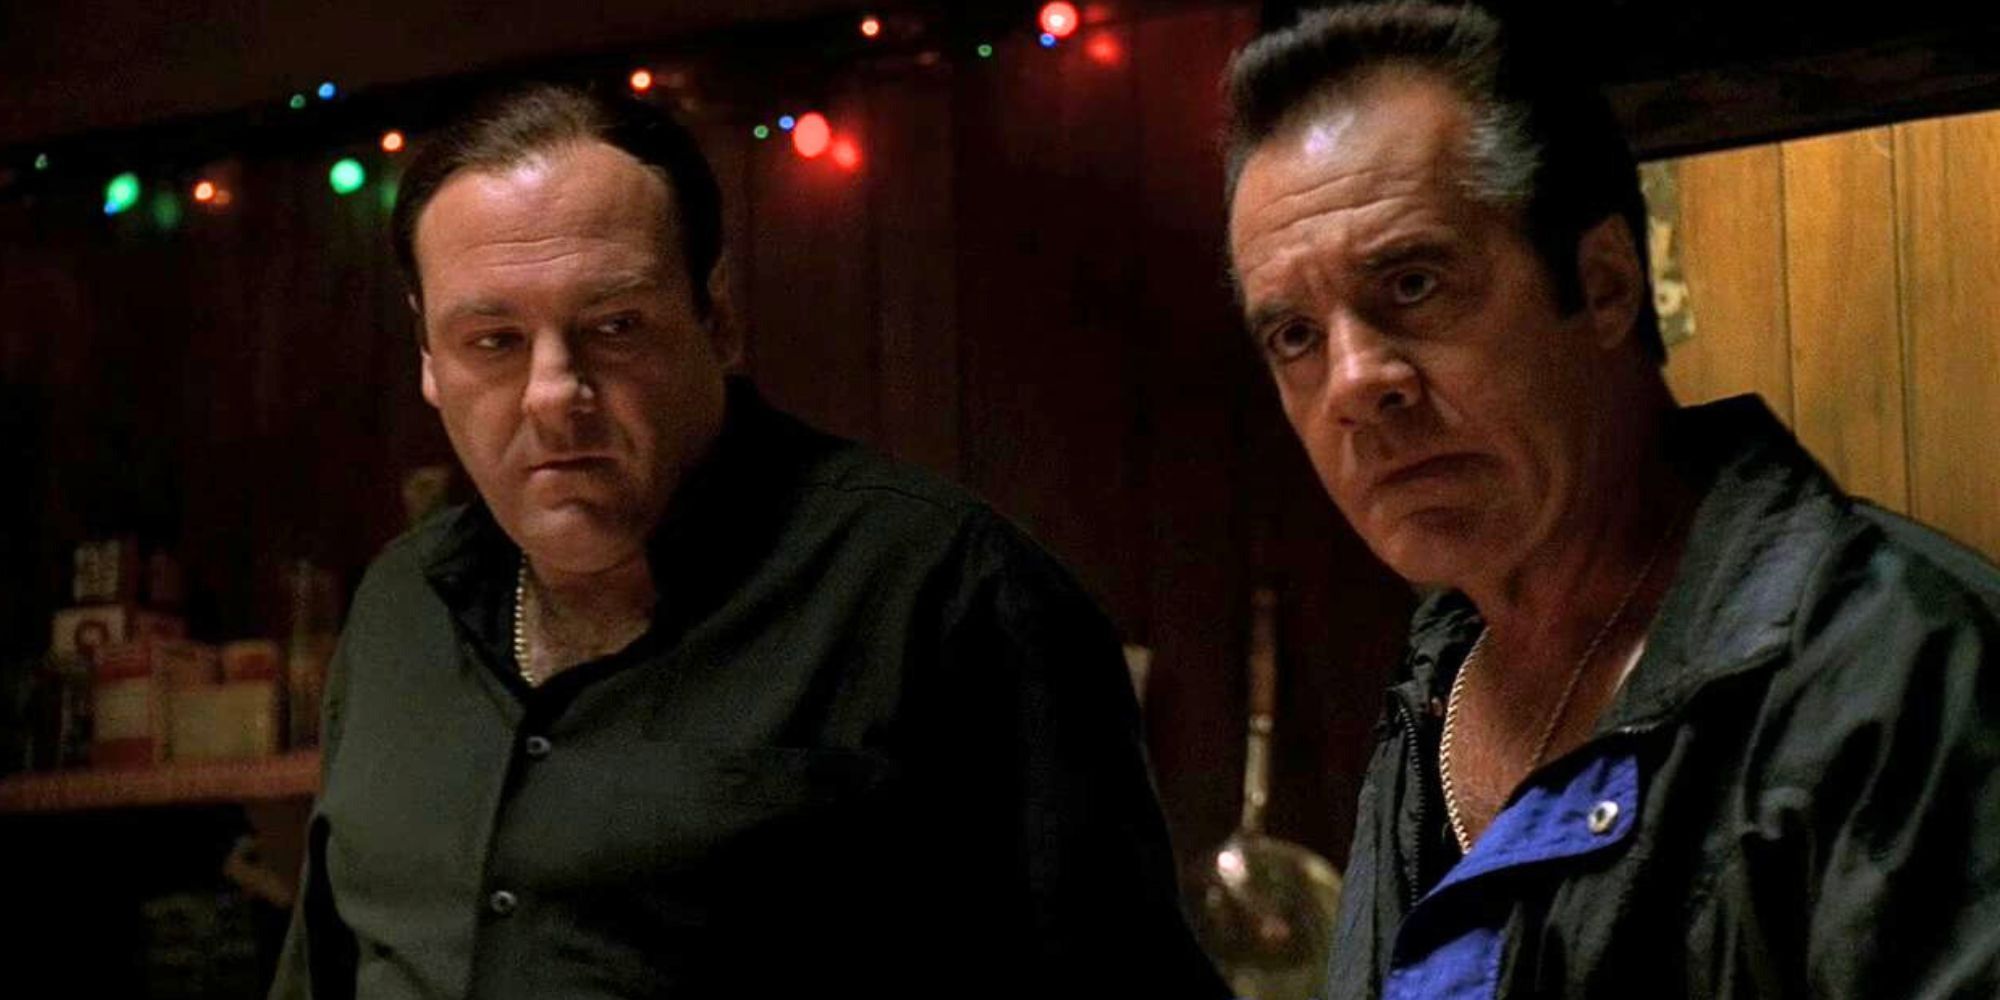 James Gandolfini standing next to Tony Sirico in The Sopranos